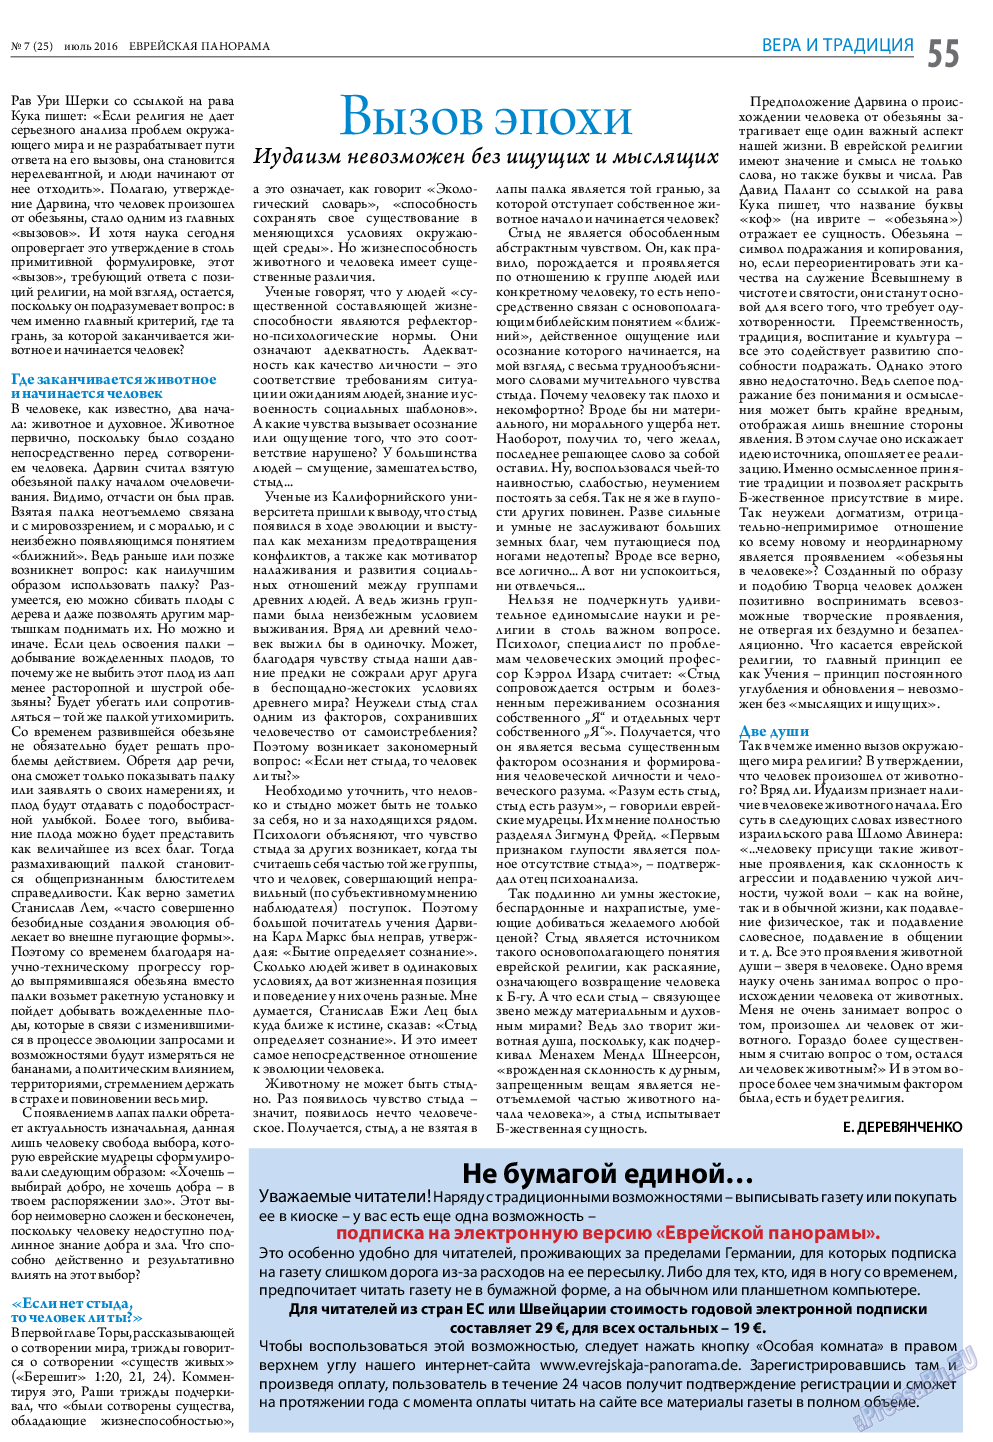 Еврейская панорама, газета. 2016 №7 стр.55